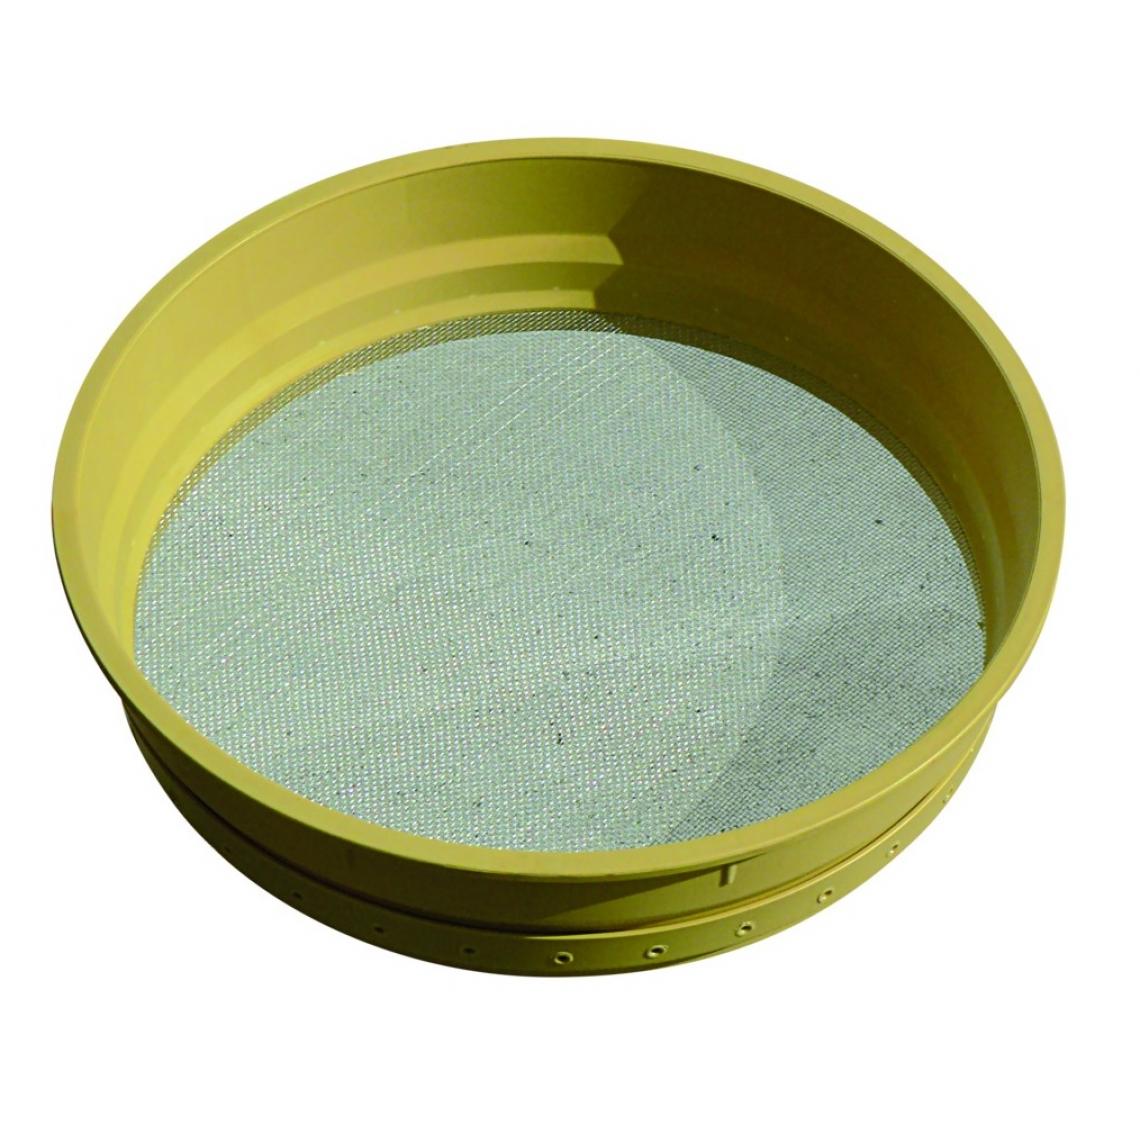 Taliaplast - Taliaplast - Tamis en plastique Tamiplast® professionnel n°14 inter-mailles 1,6 mm - 370506 - Bacs à gâcher